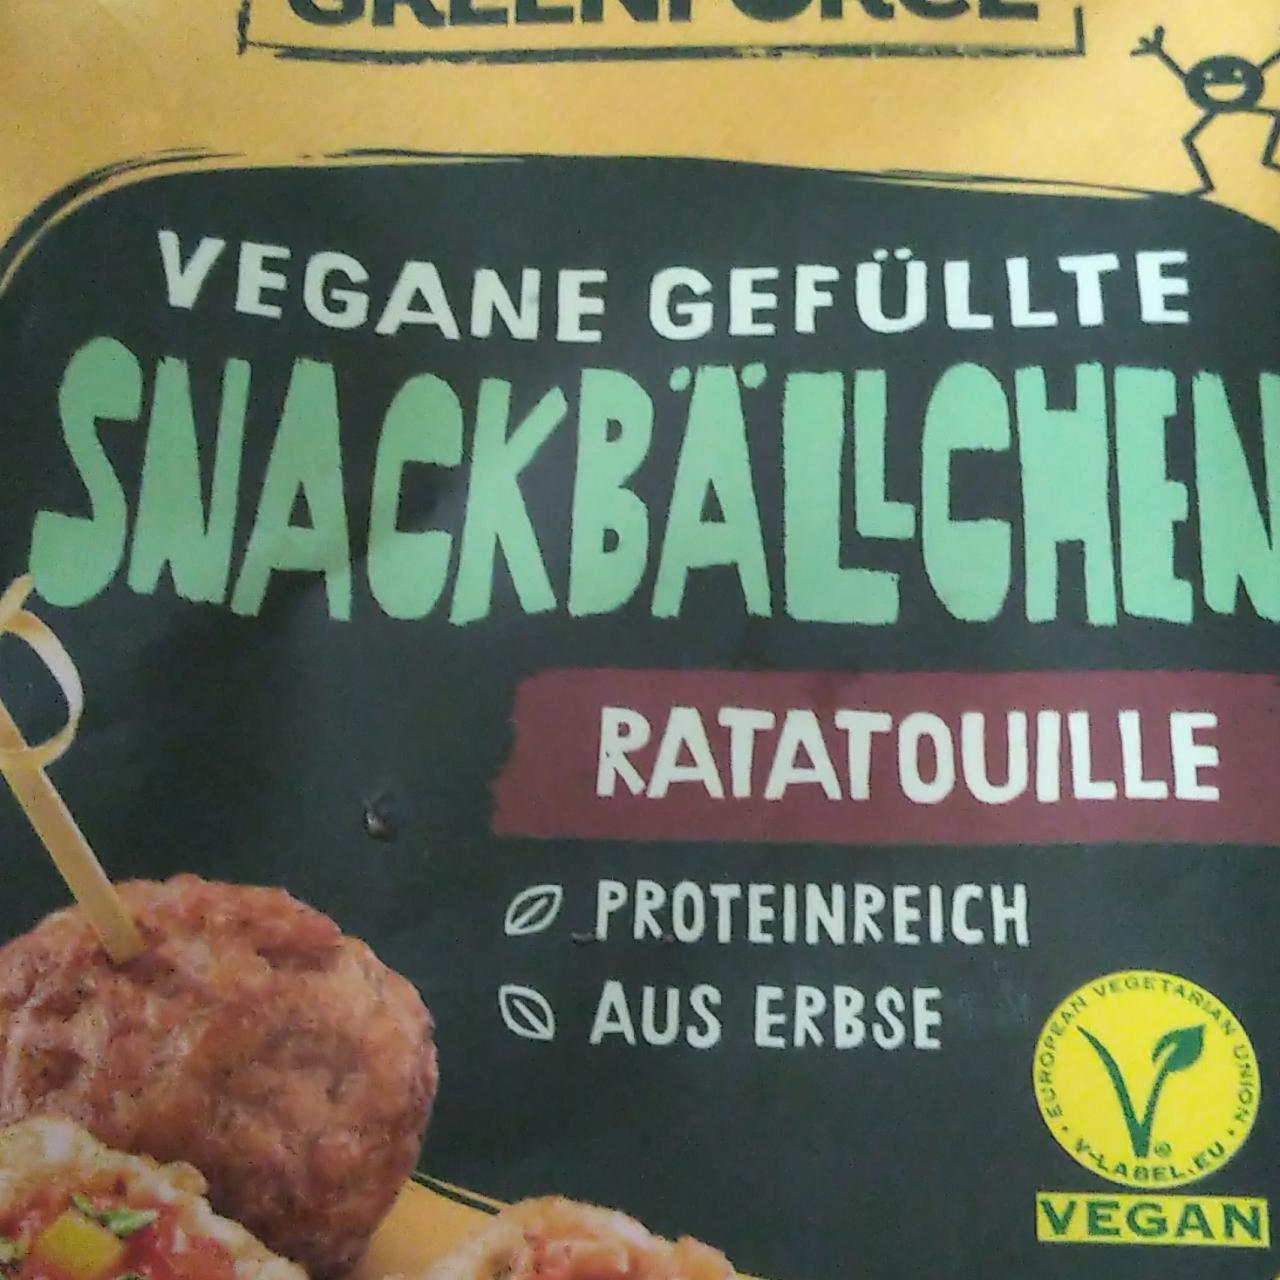 Fotografie - Vegane gefüllte snackbällchen ratatouille Greenforce